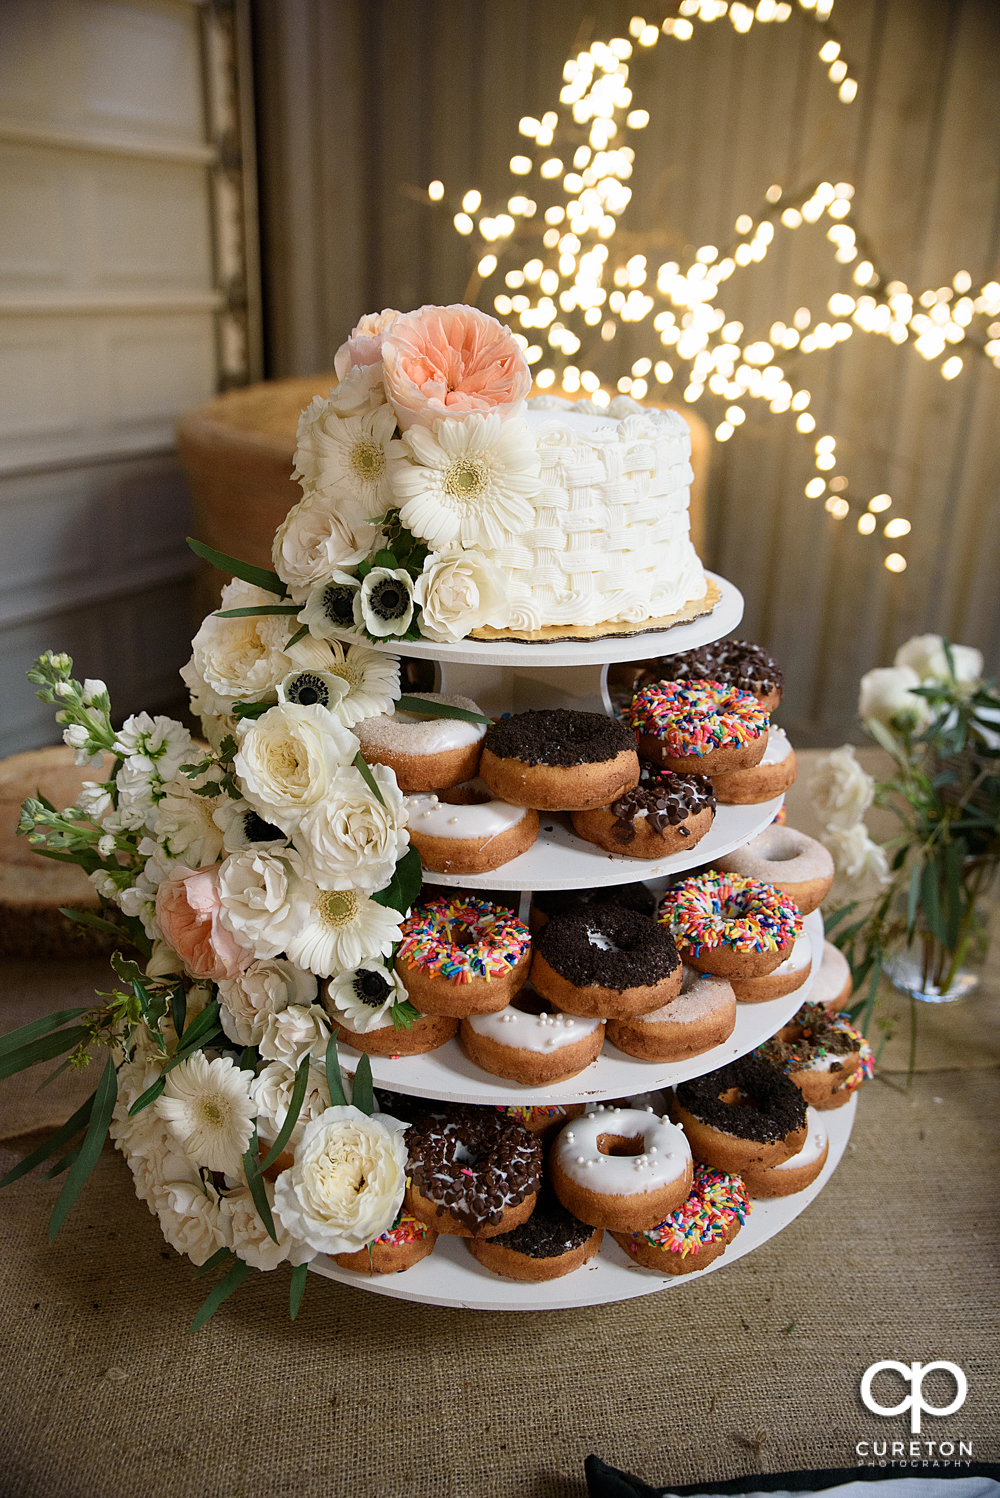 Donut cake display at the wedding.